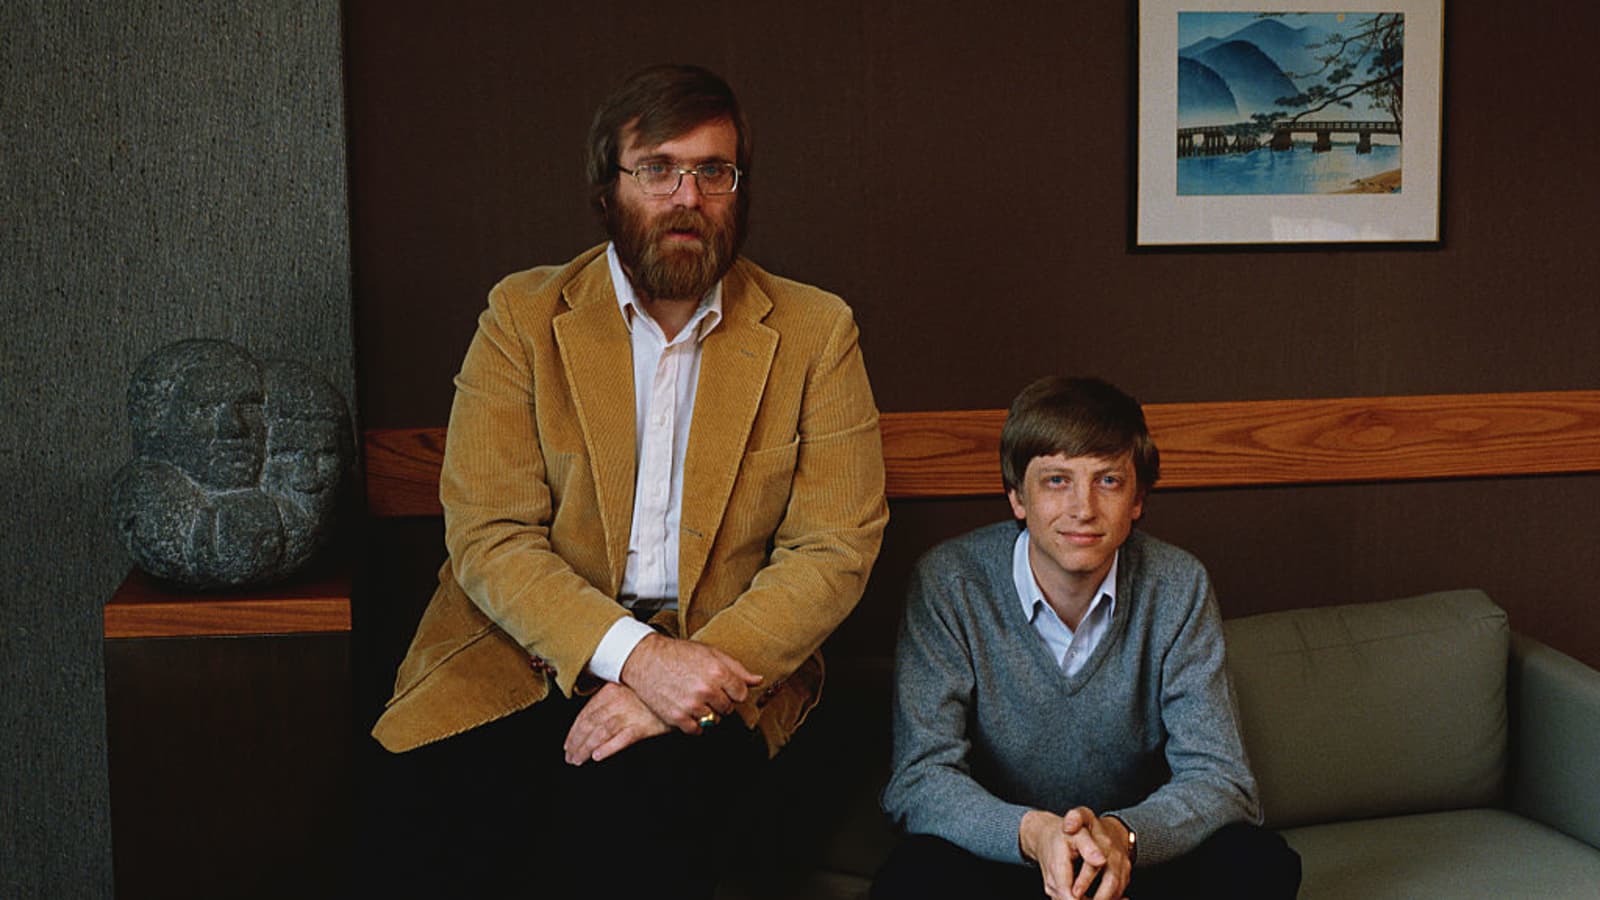 Microsoft co-founders Bill Gates and Paul Allen met in high school